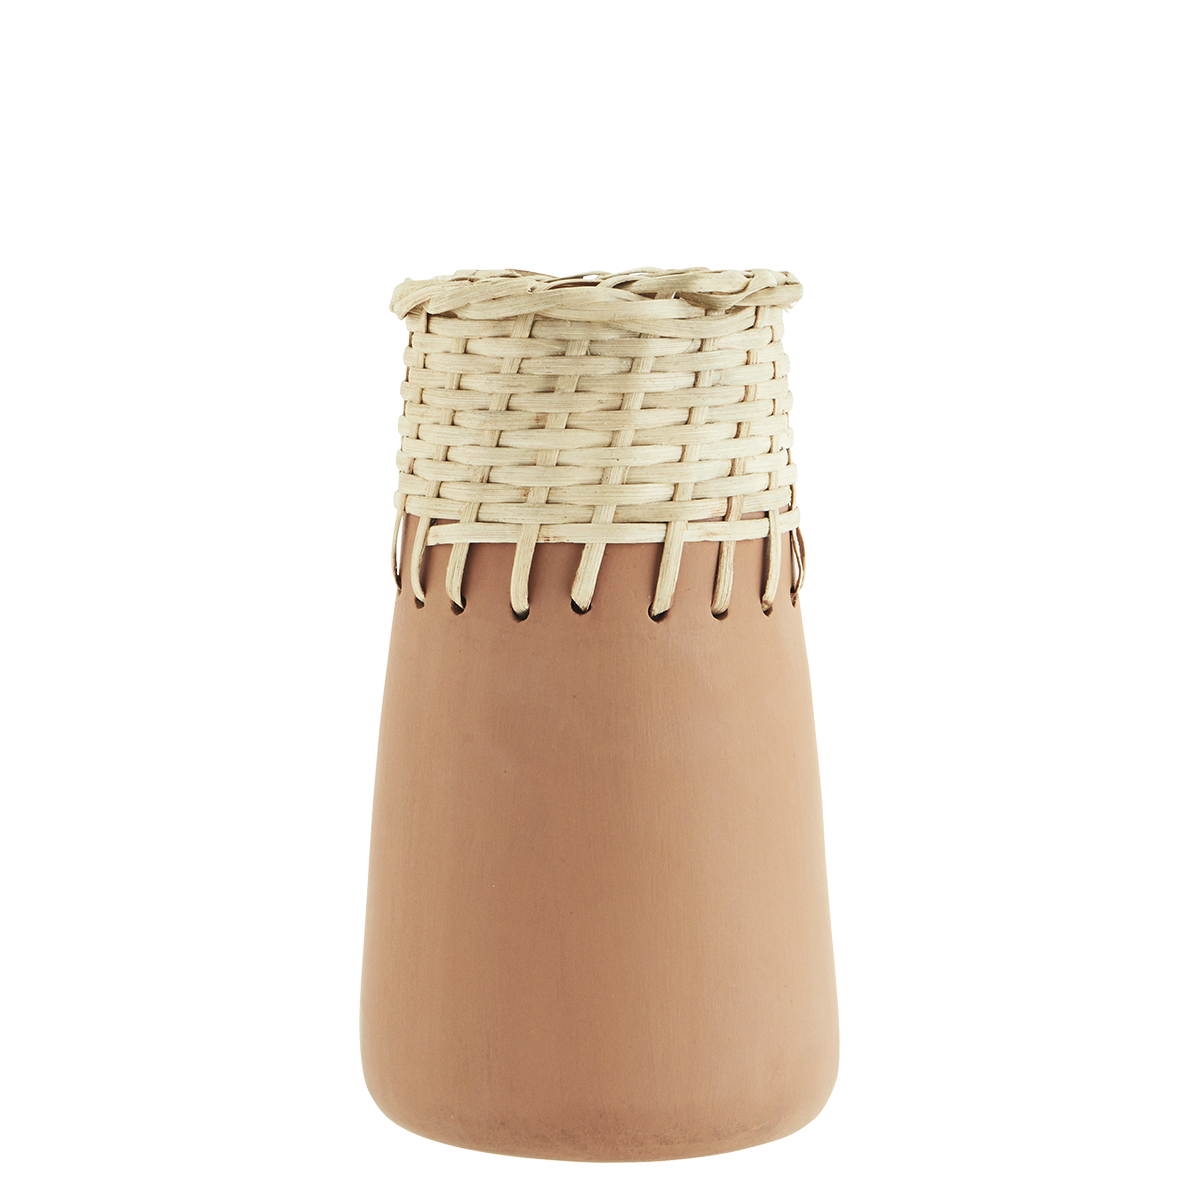 Terracotta vase w/ cane